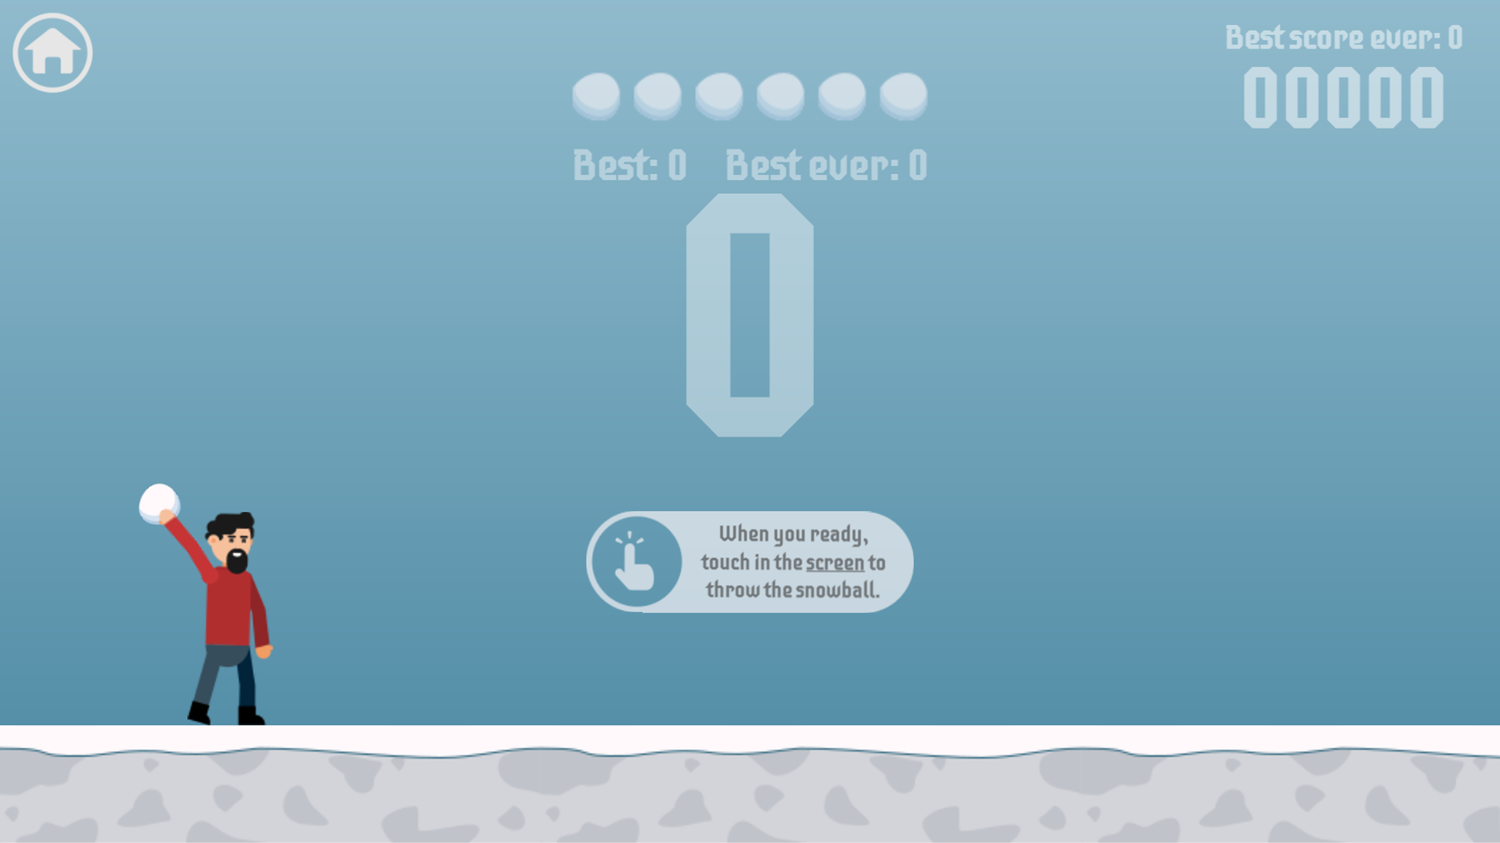 Snowball Throw Game How To Play Screenshot.